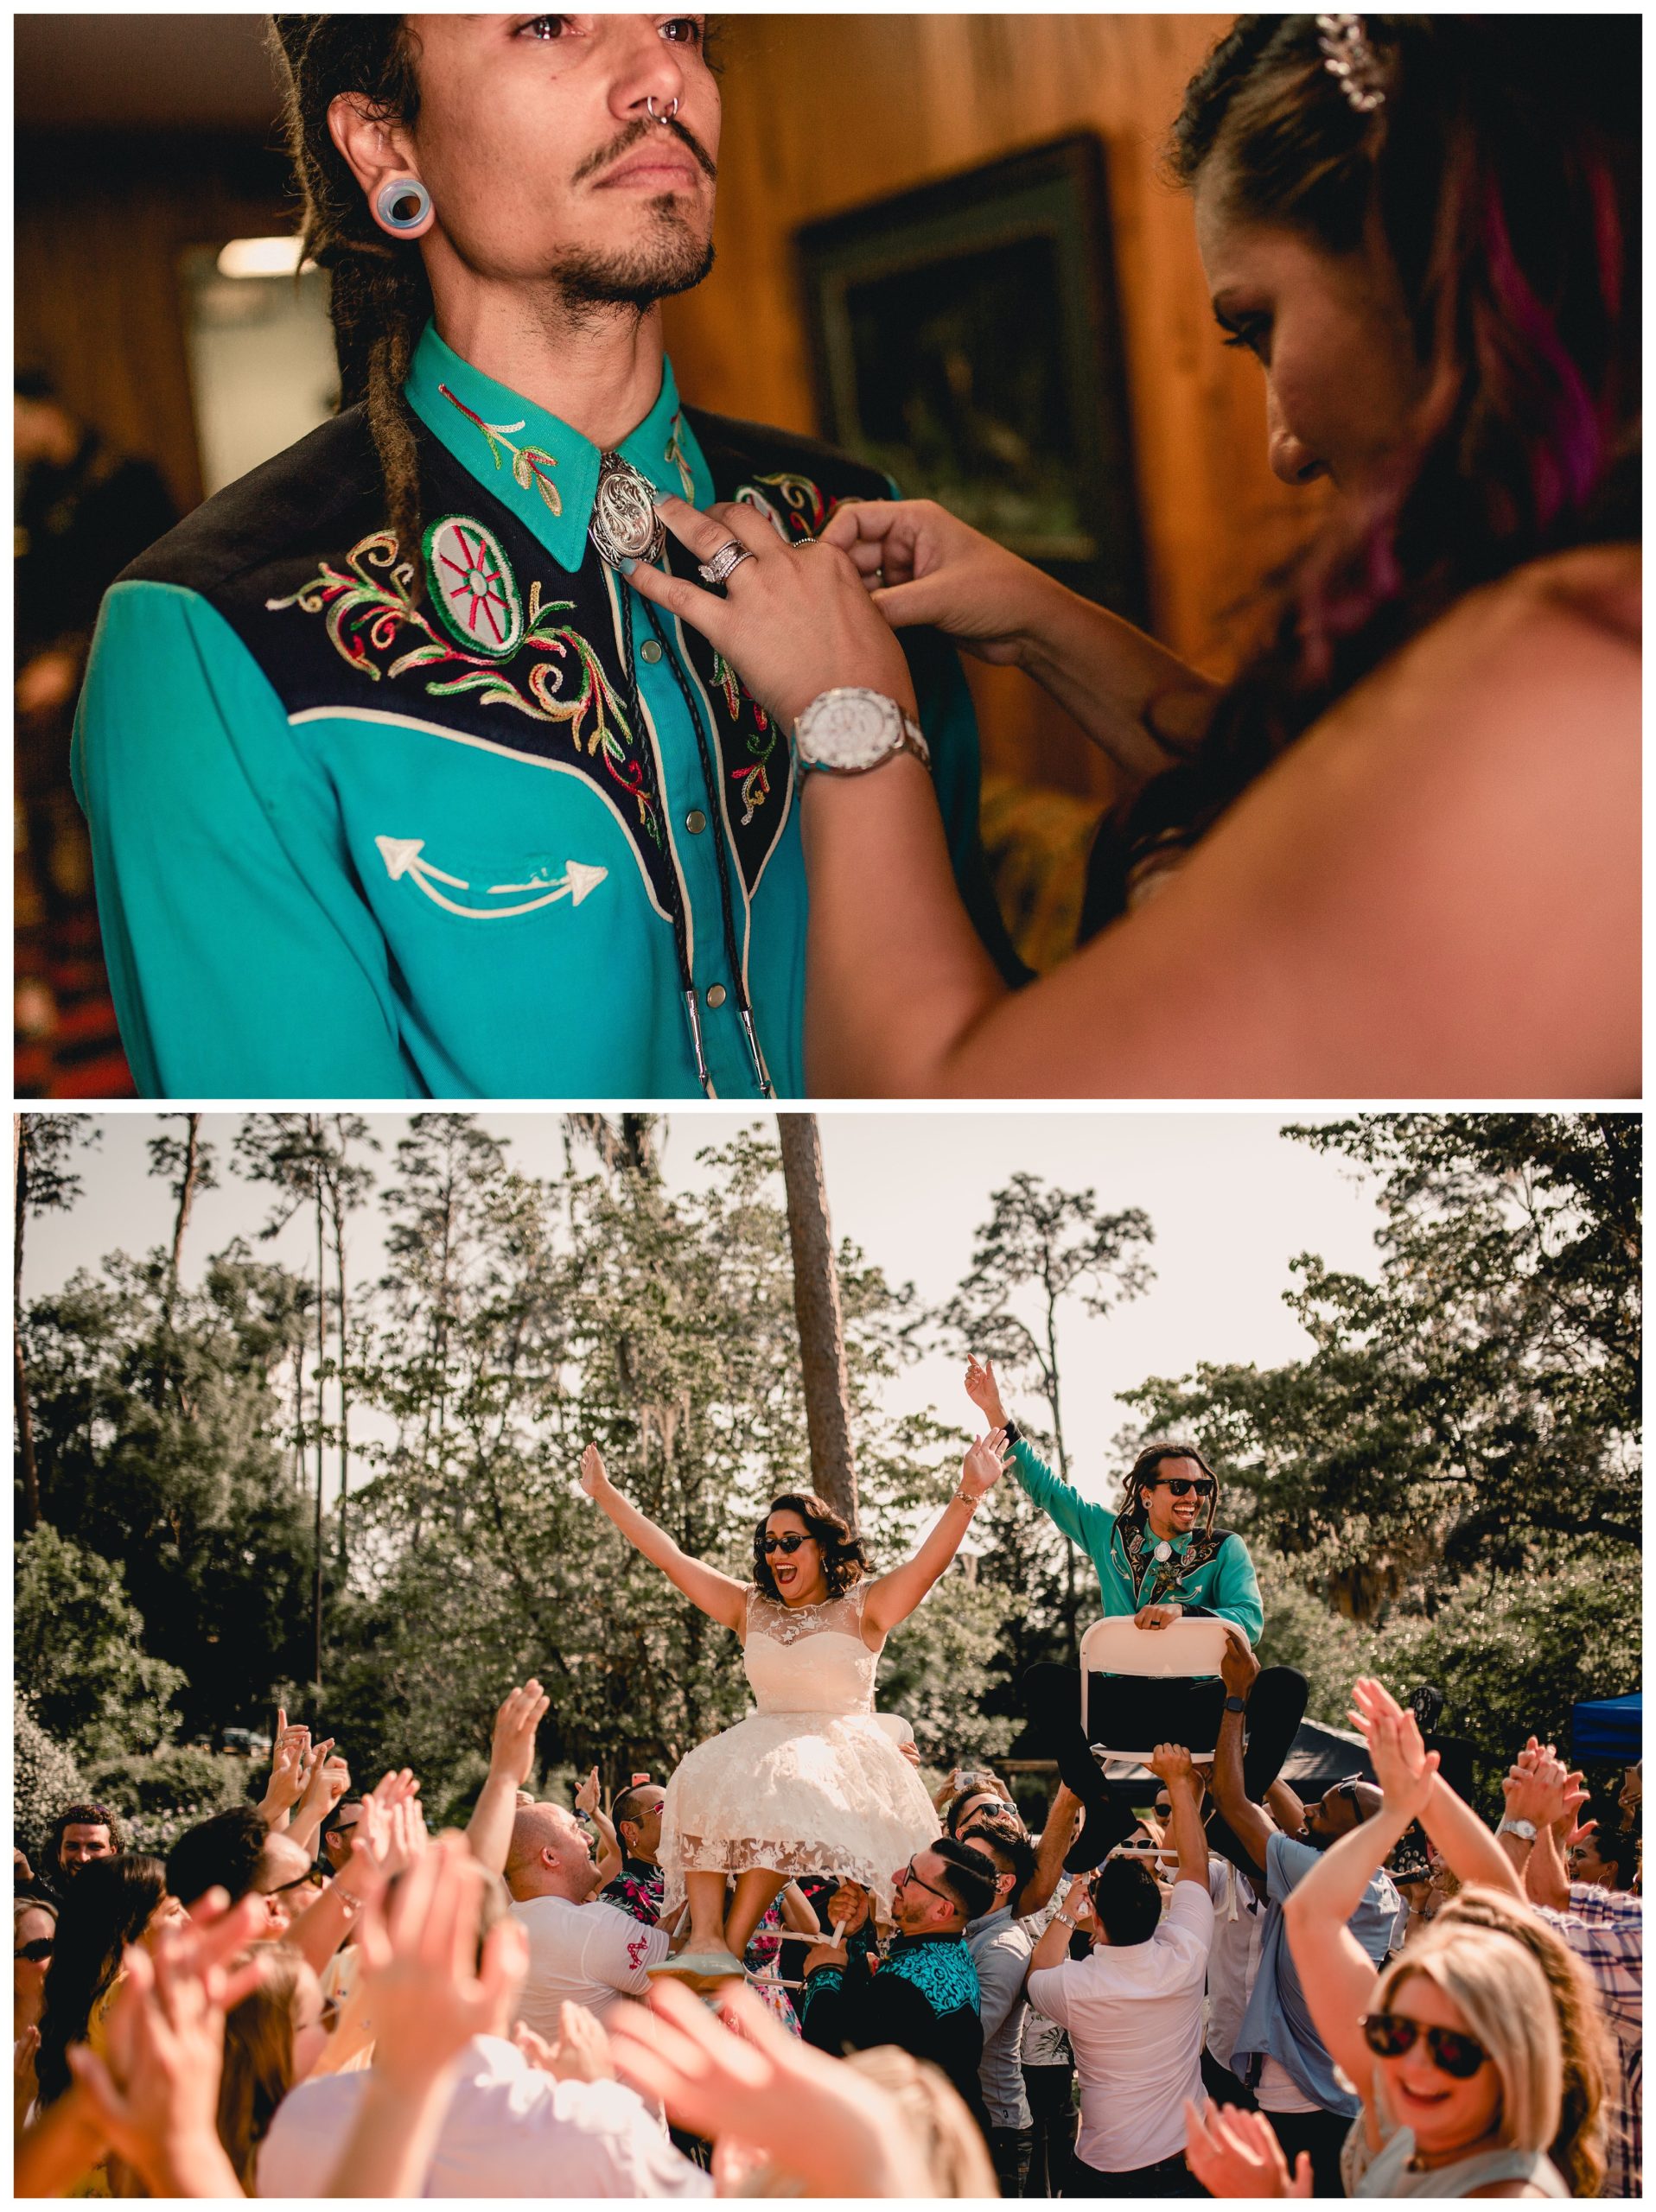 Lifestyle wedding photographer favorite moments of 2019